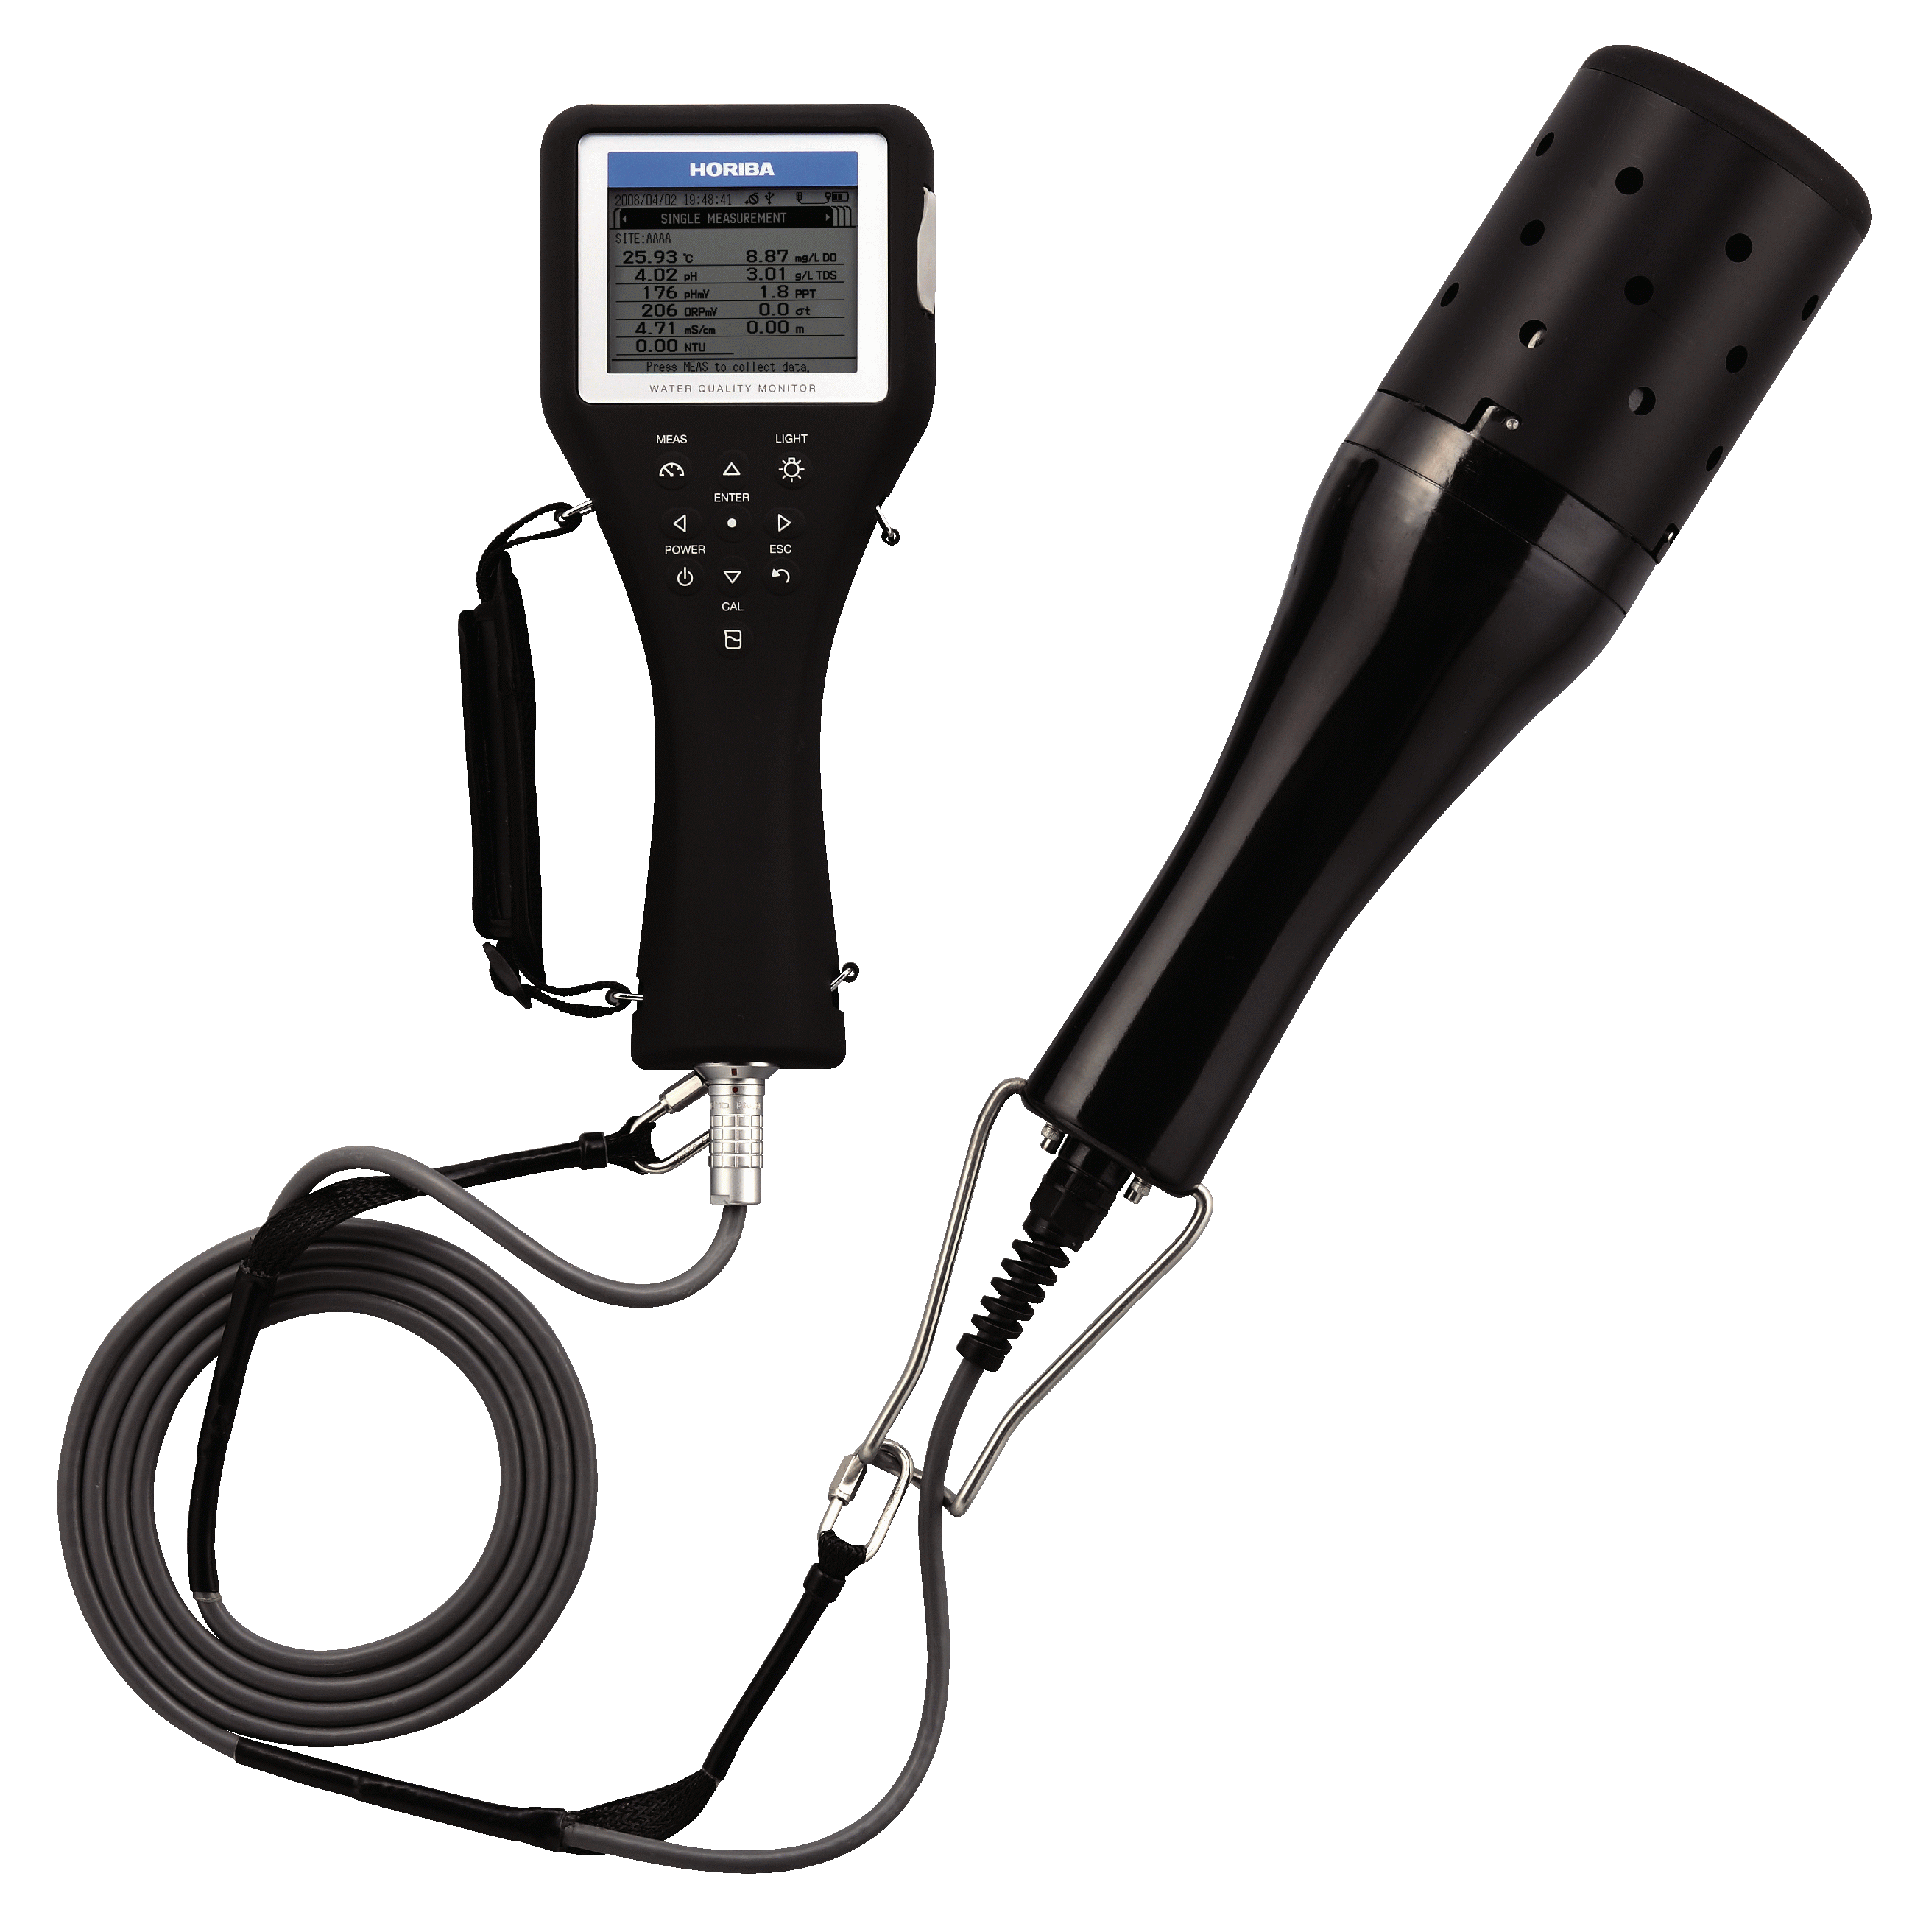 Horiba U-50 Series Multiparameter Water Analysis Professional Instrument optional with GPS and Sea Depth Measurement